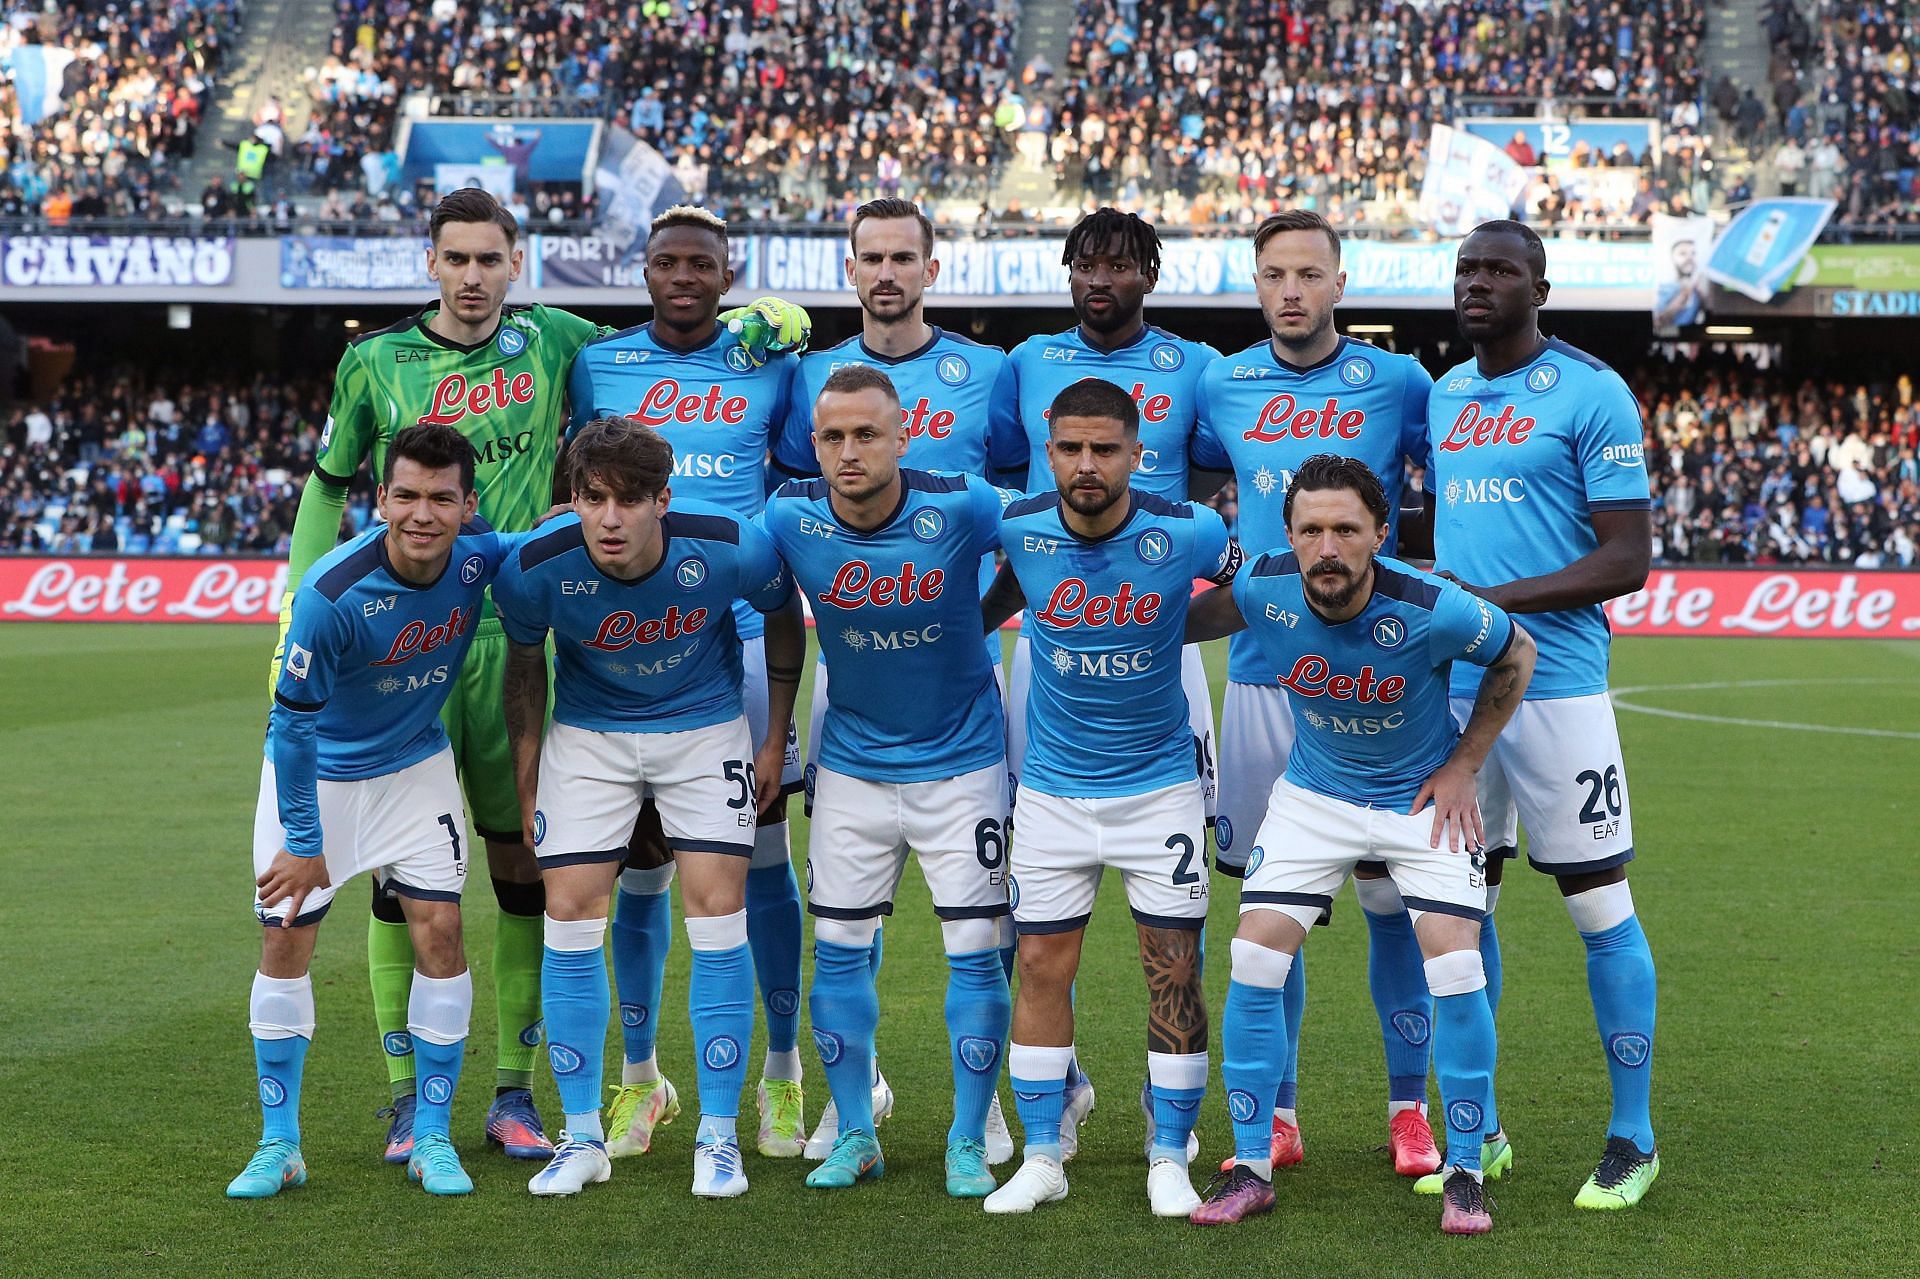 Napoli play Torino on Saturday in Serie A